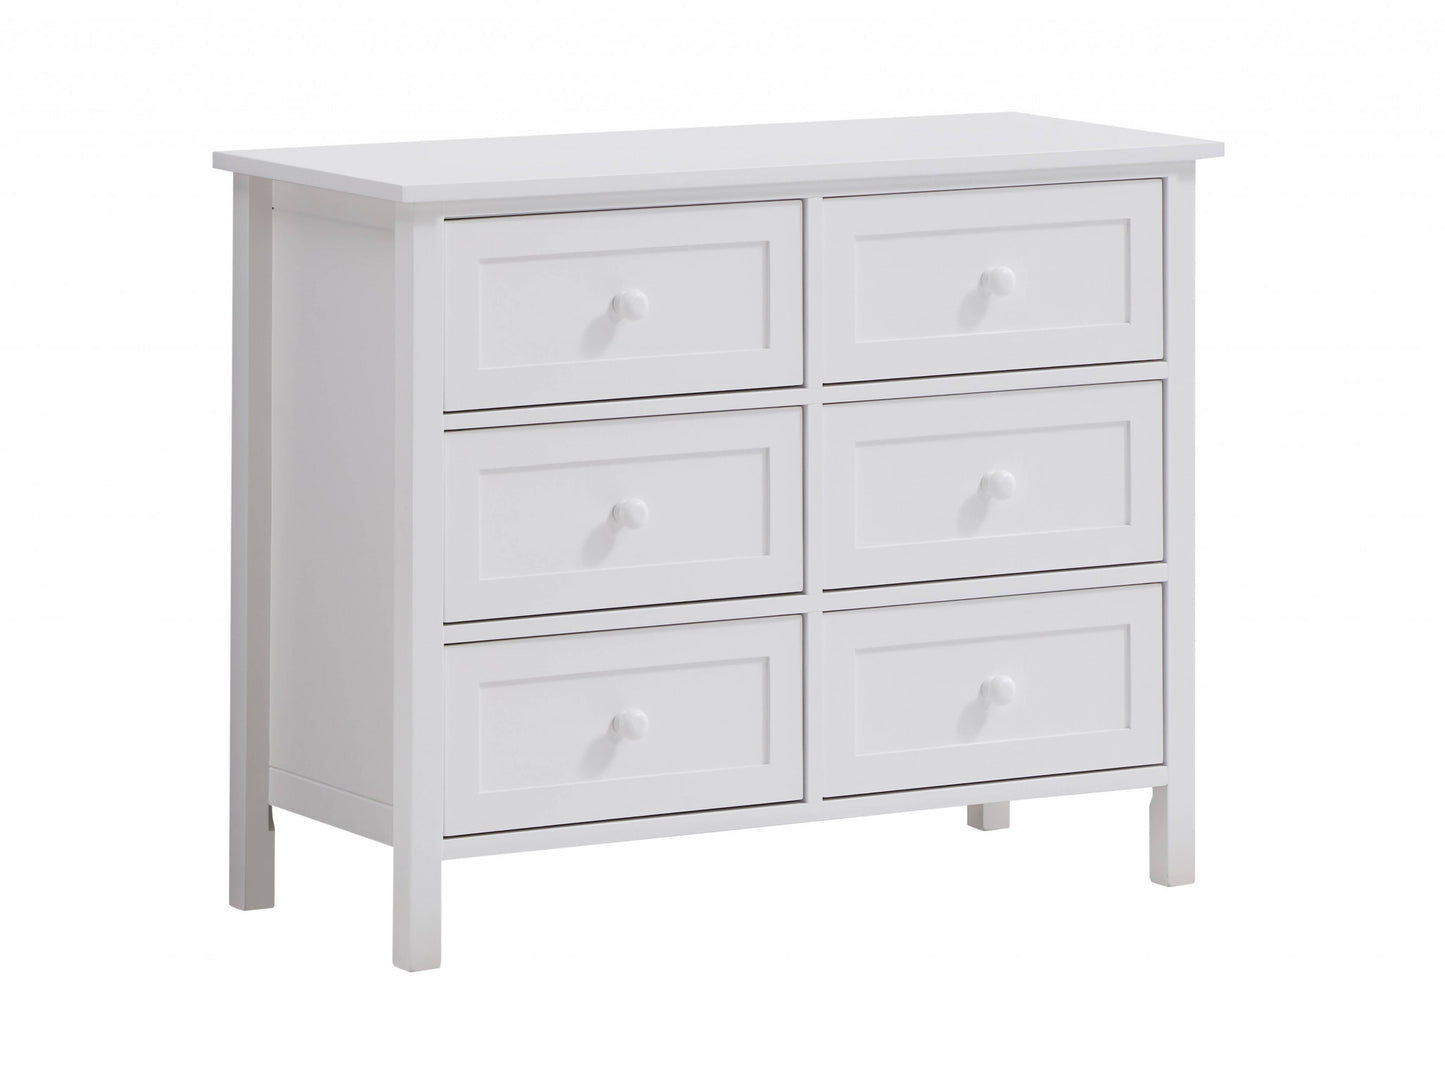 39" White Manufactured Wood Six Drawer Dresser